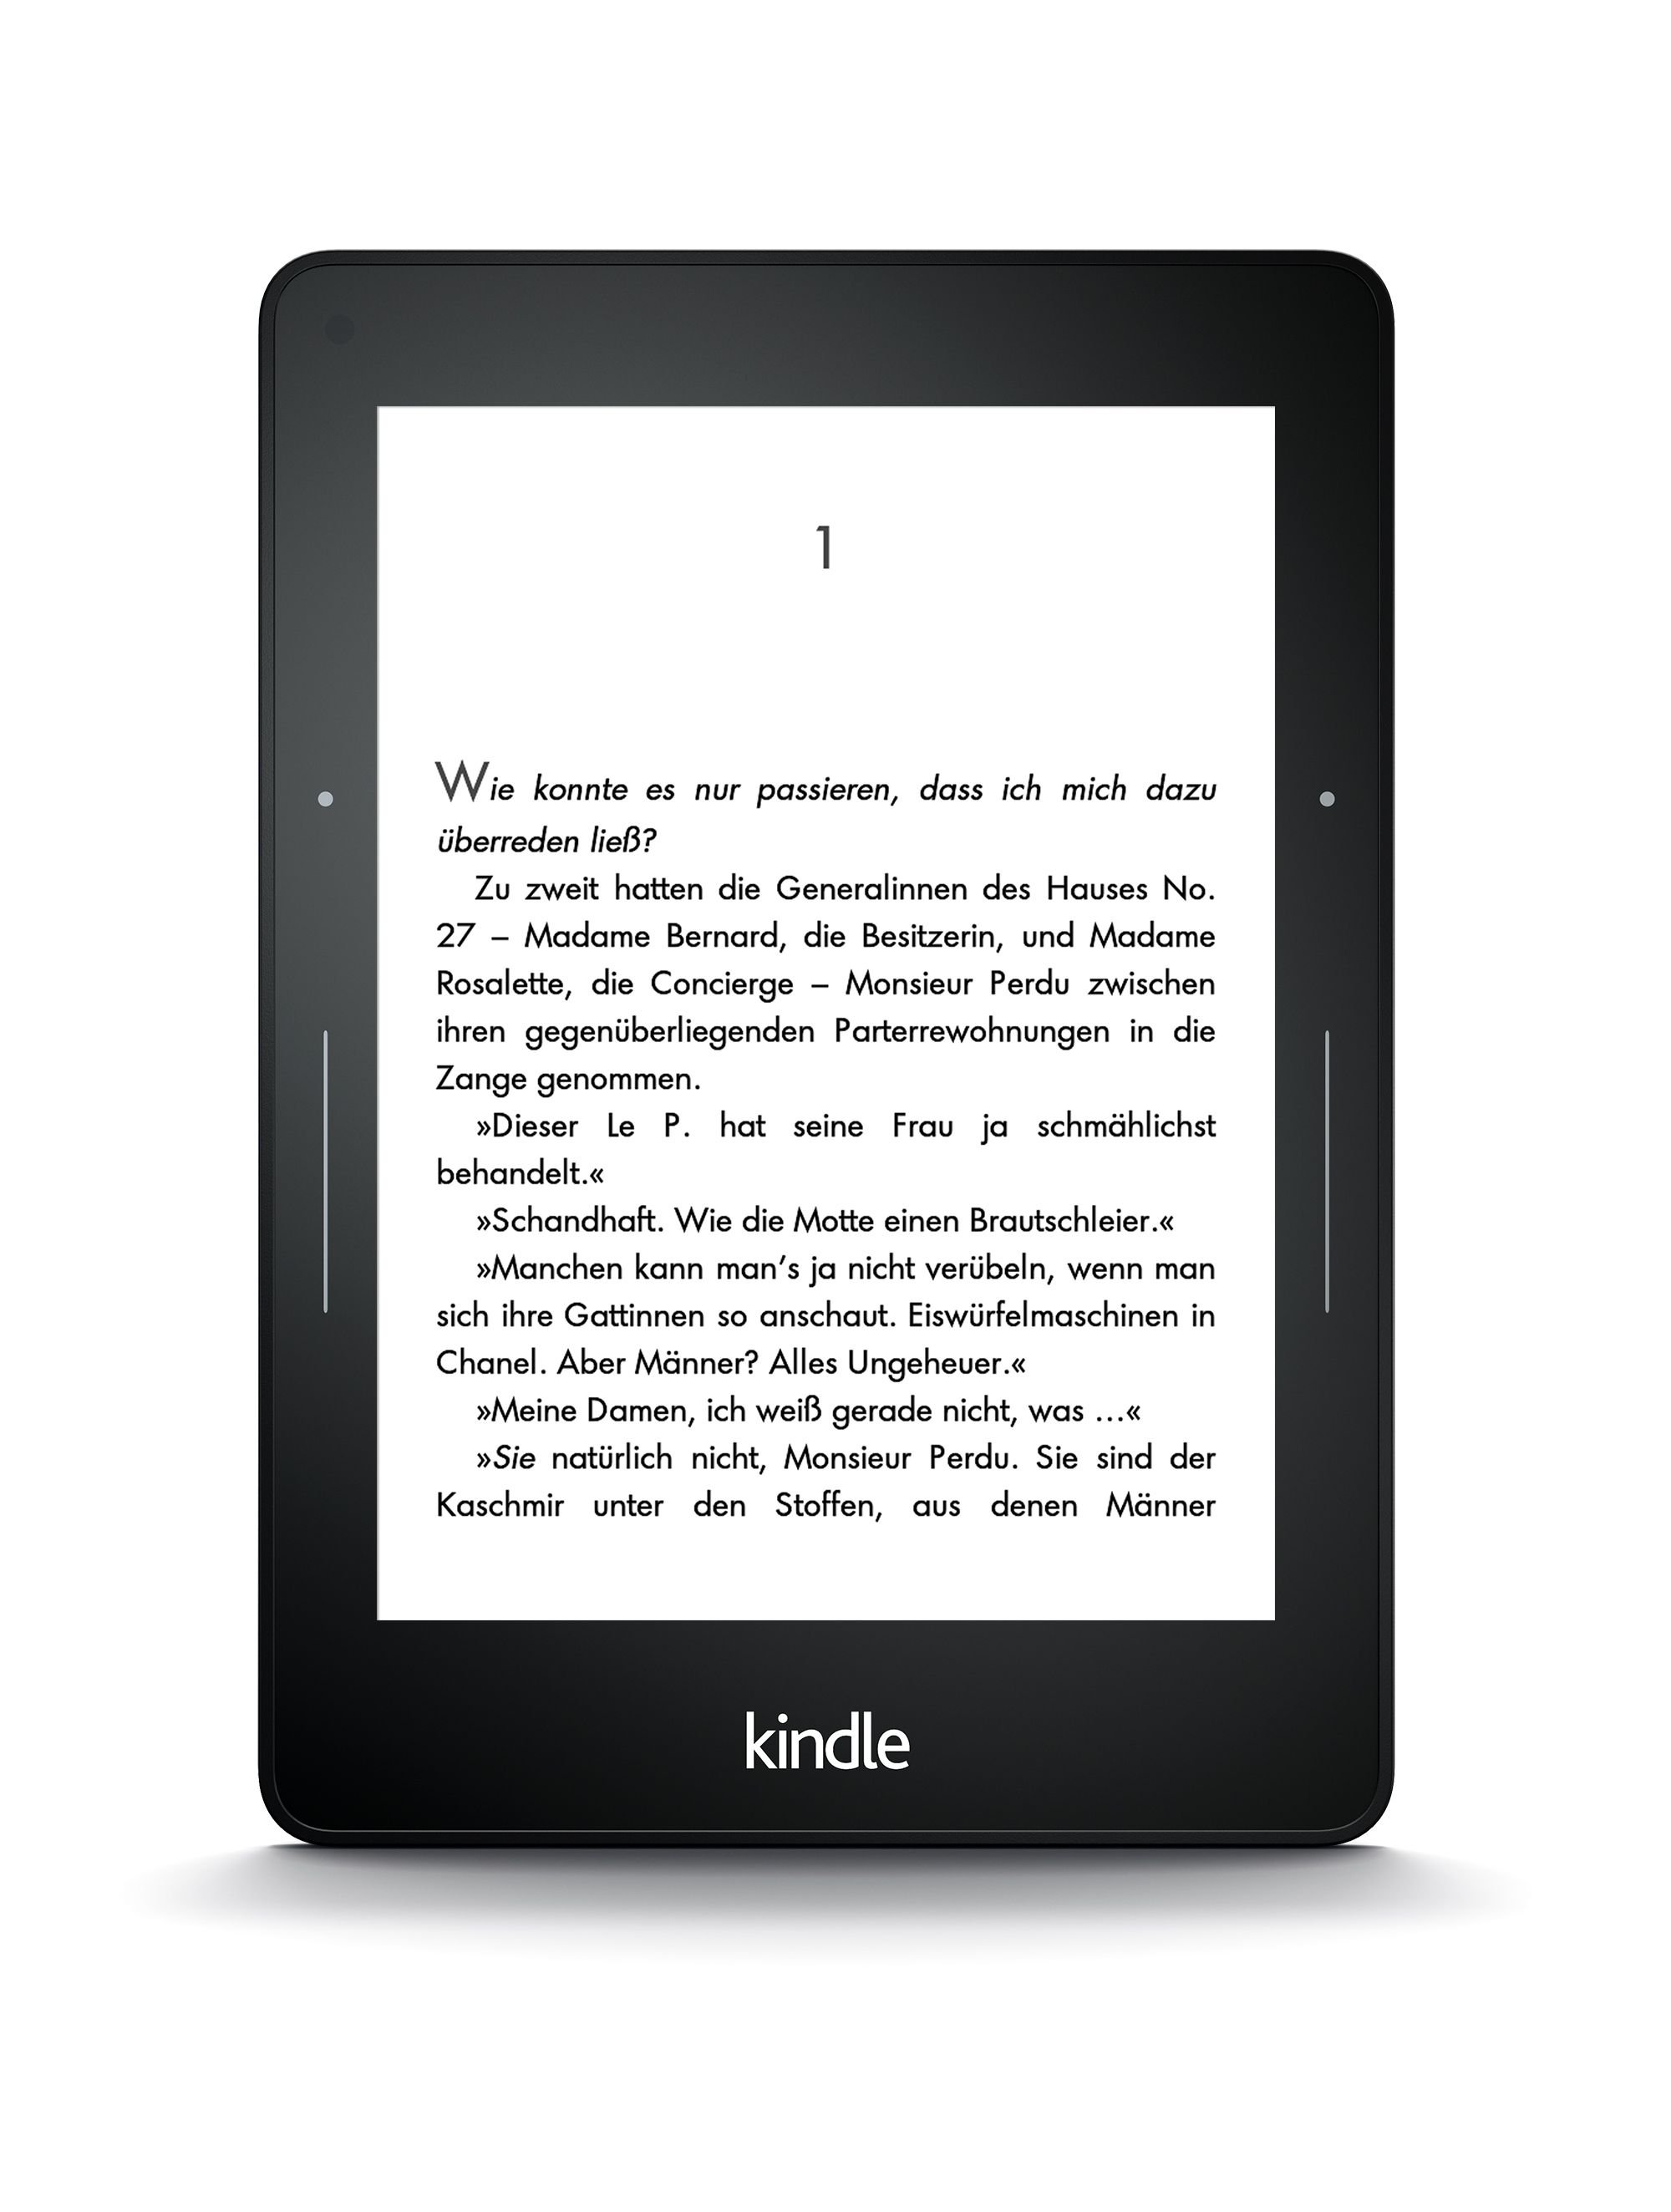 Der neue E-Book-Reader Voyage aus Amazons Kindle-Serie. 